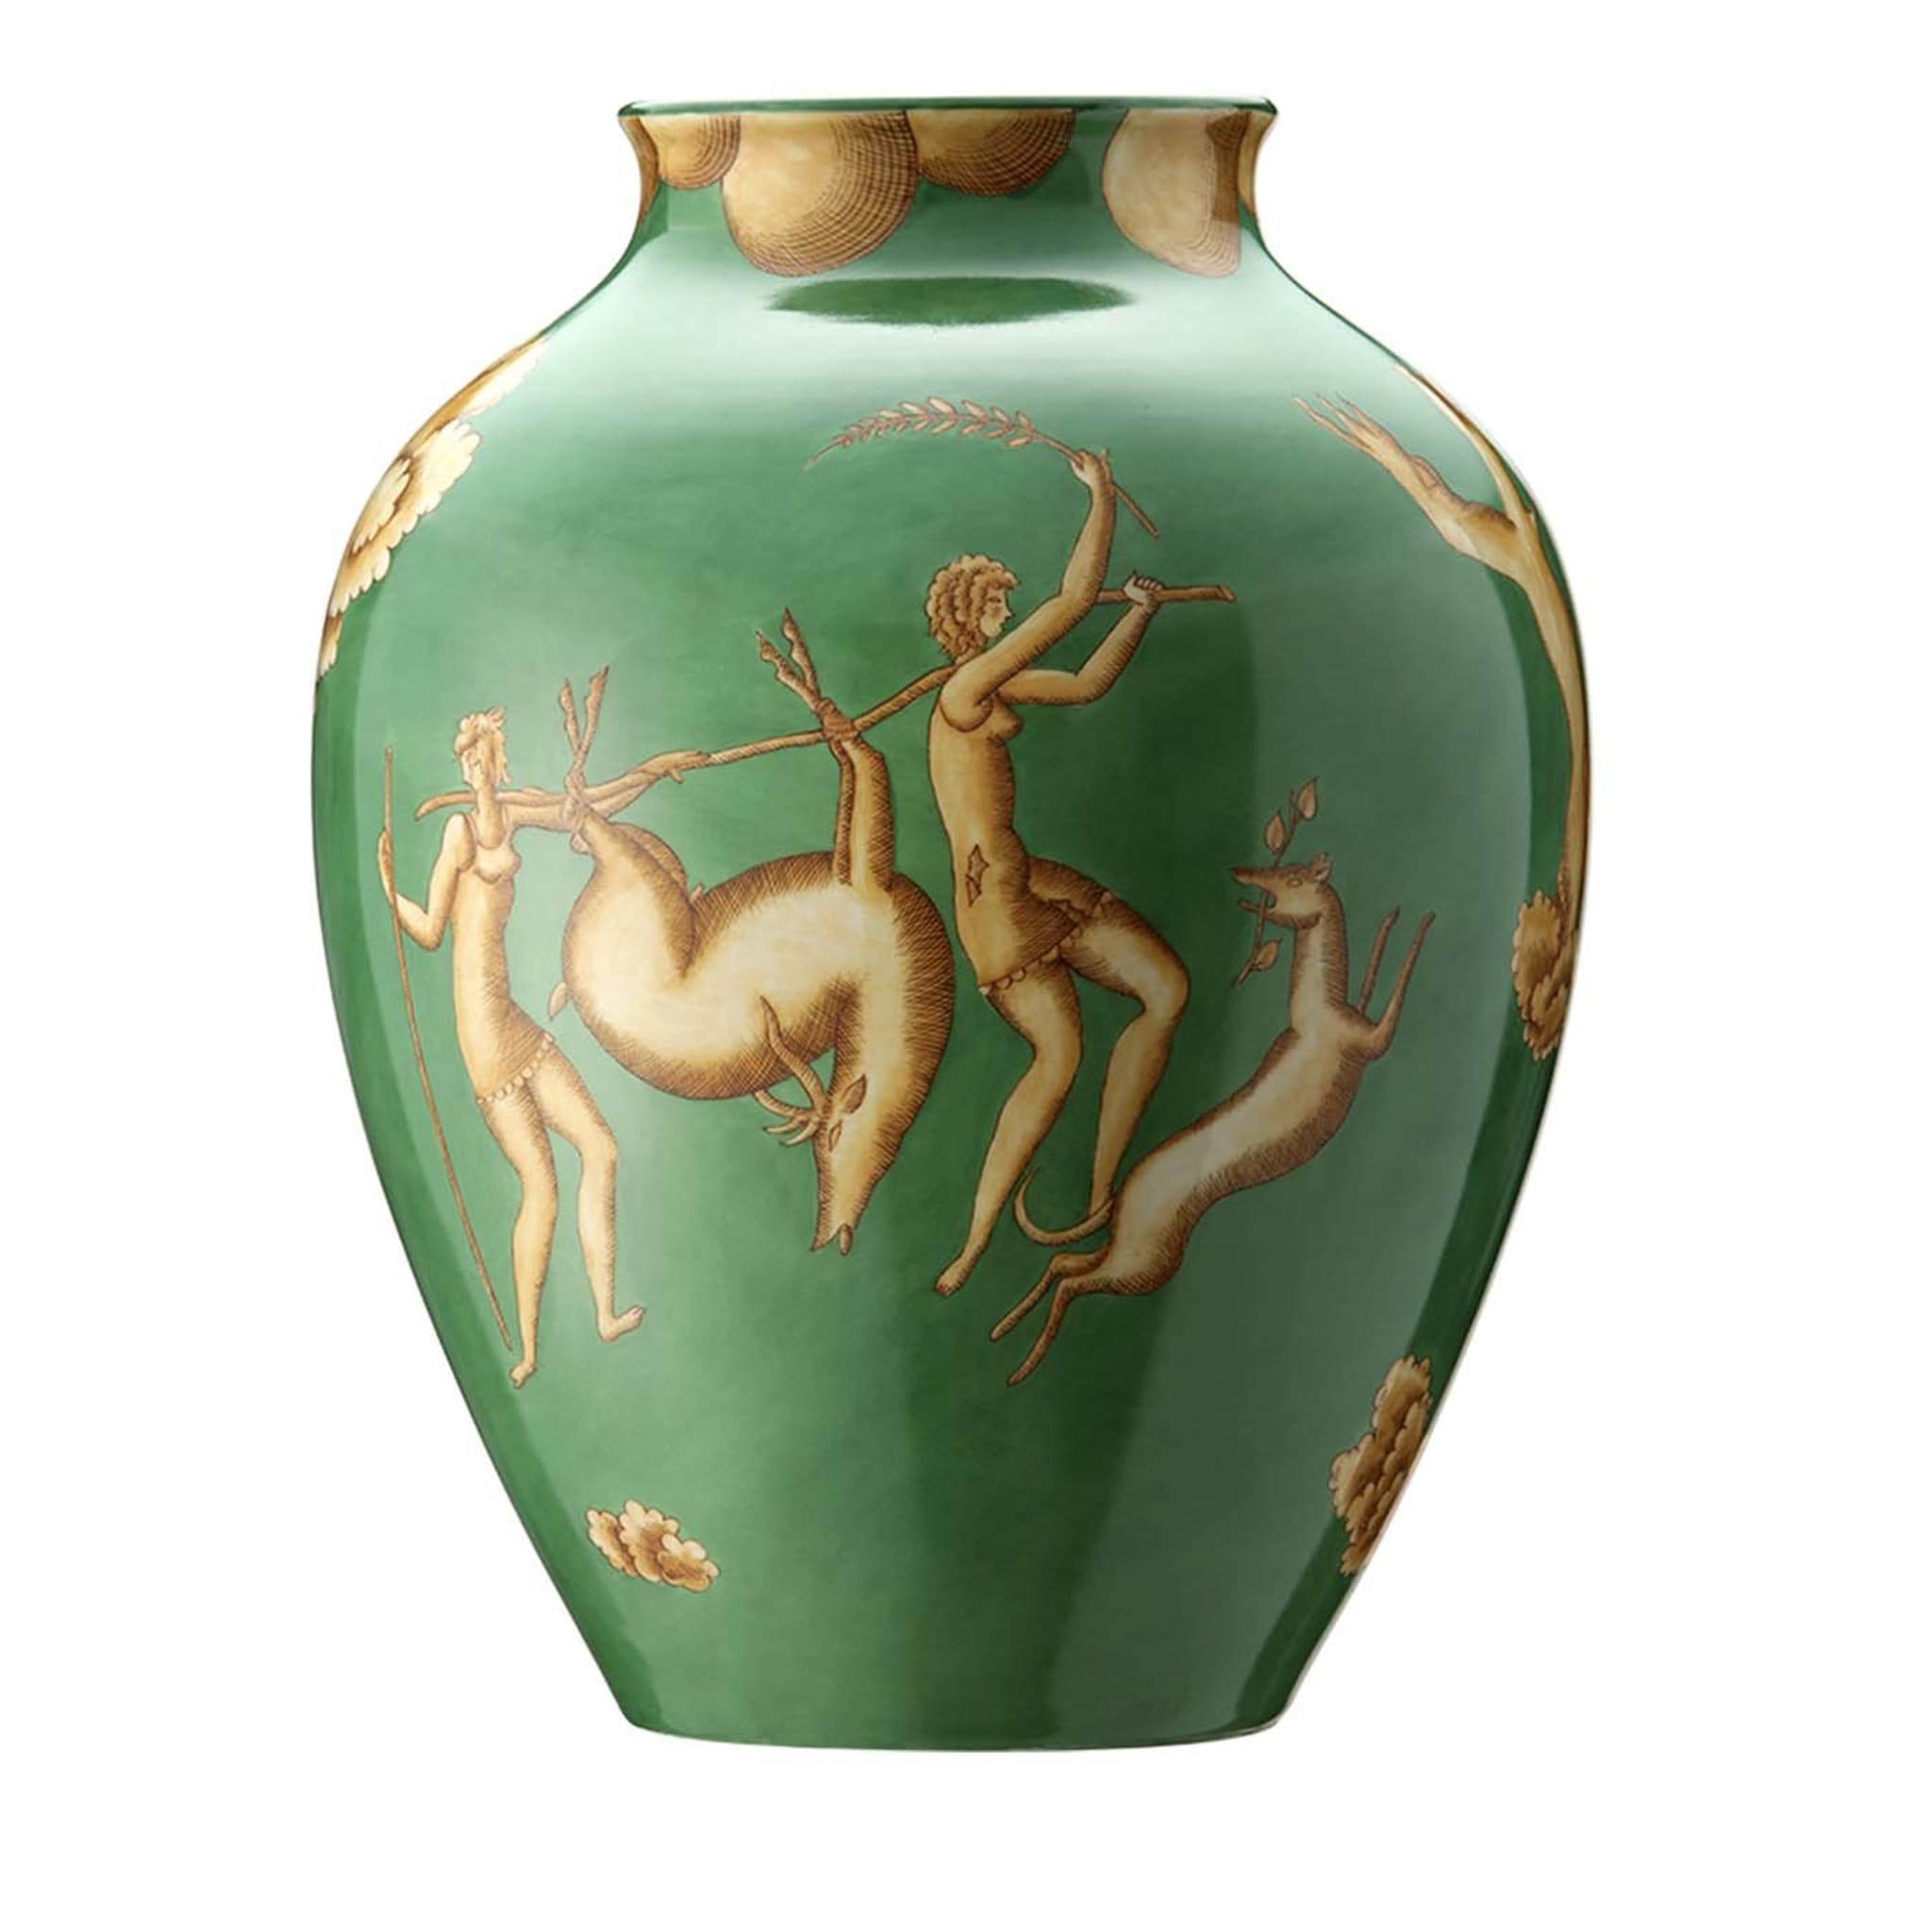 La Vetatoria Orcino Vase - Limited Edition by Gio Ponti - Main view